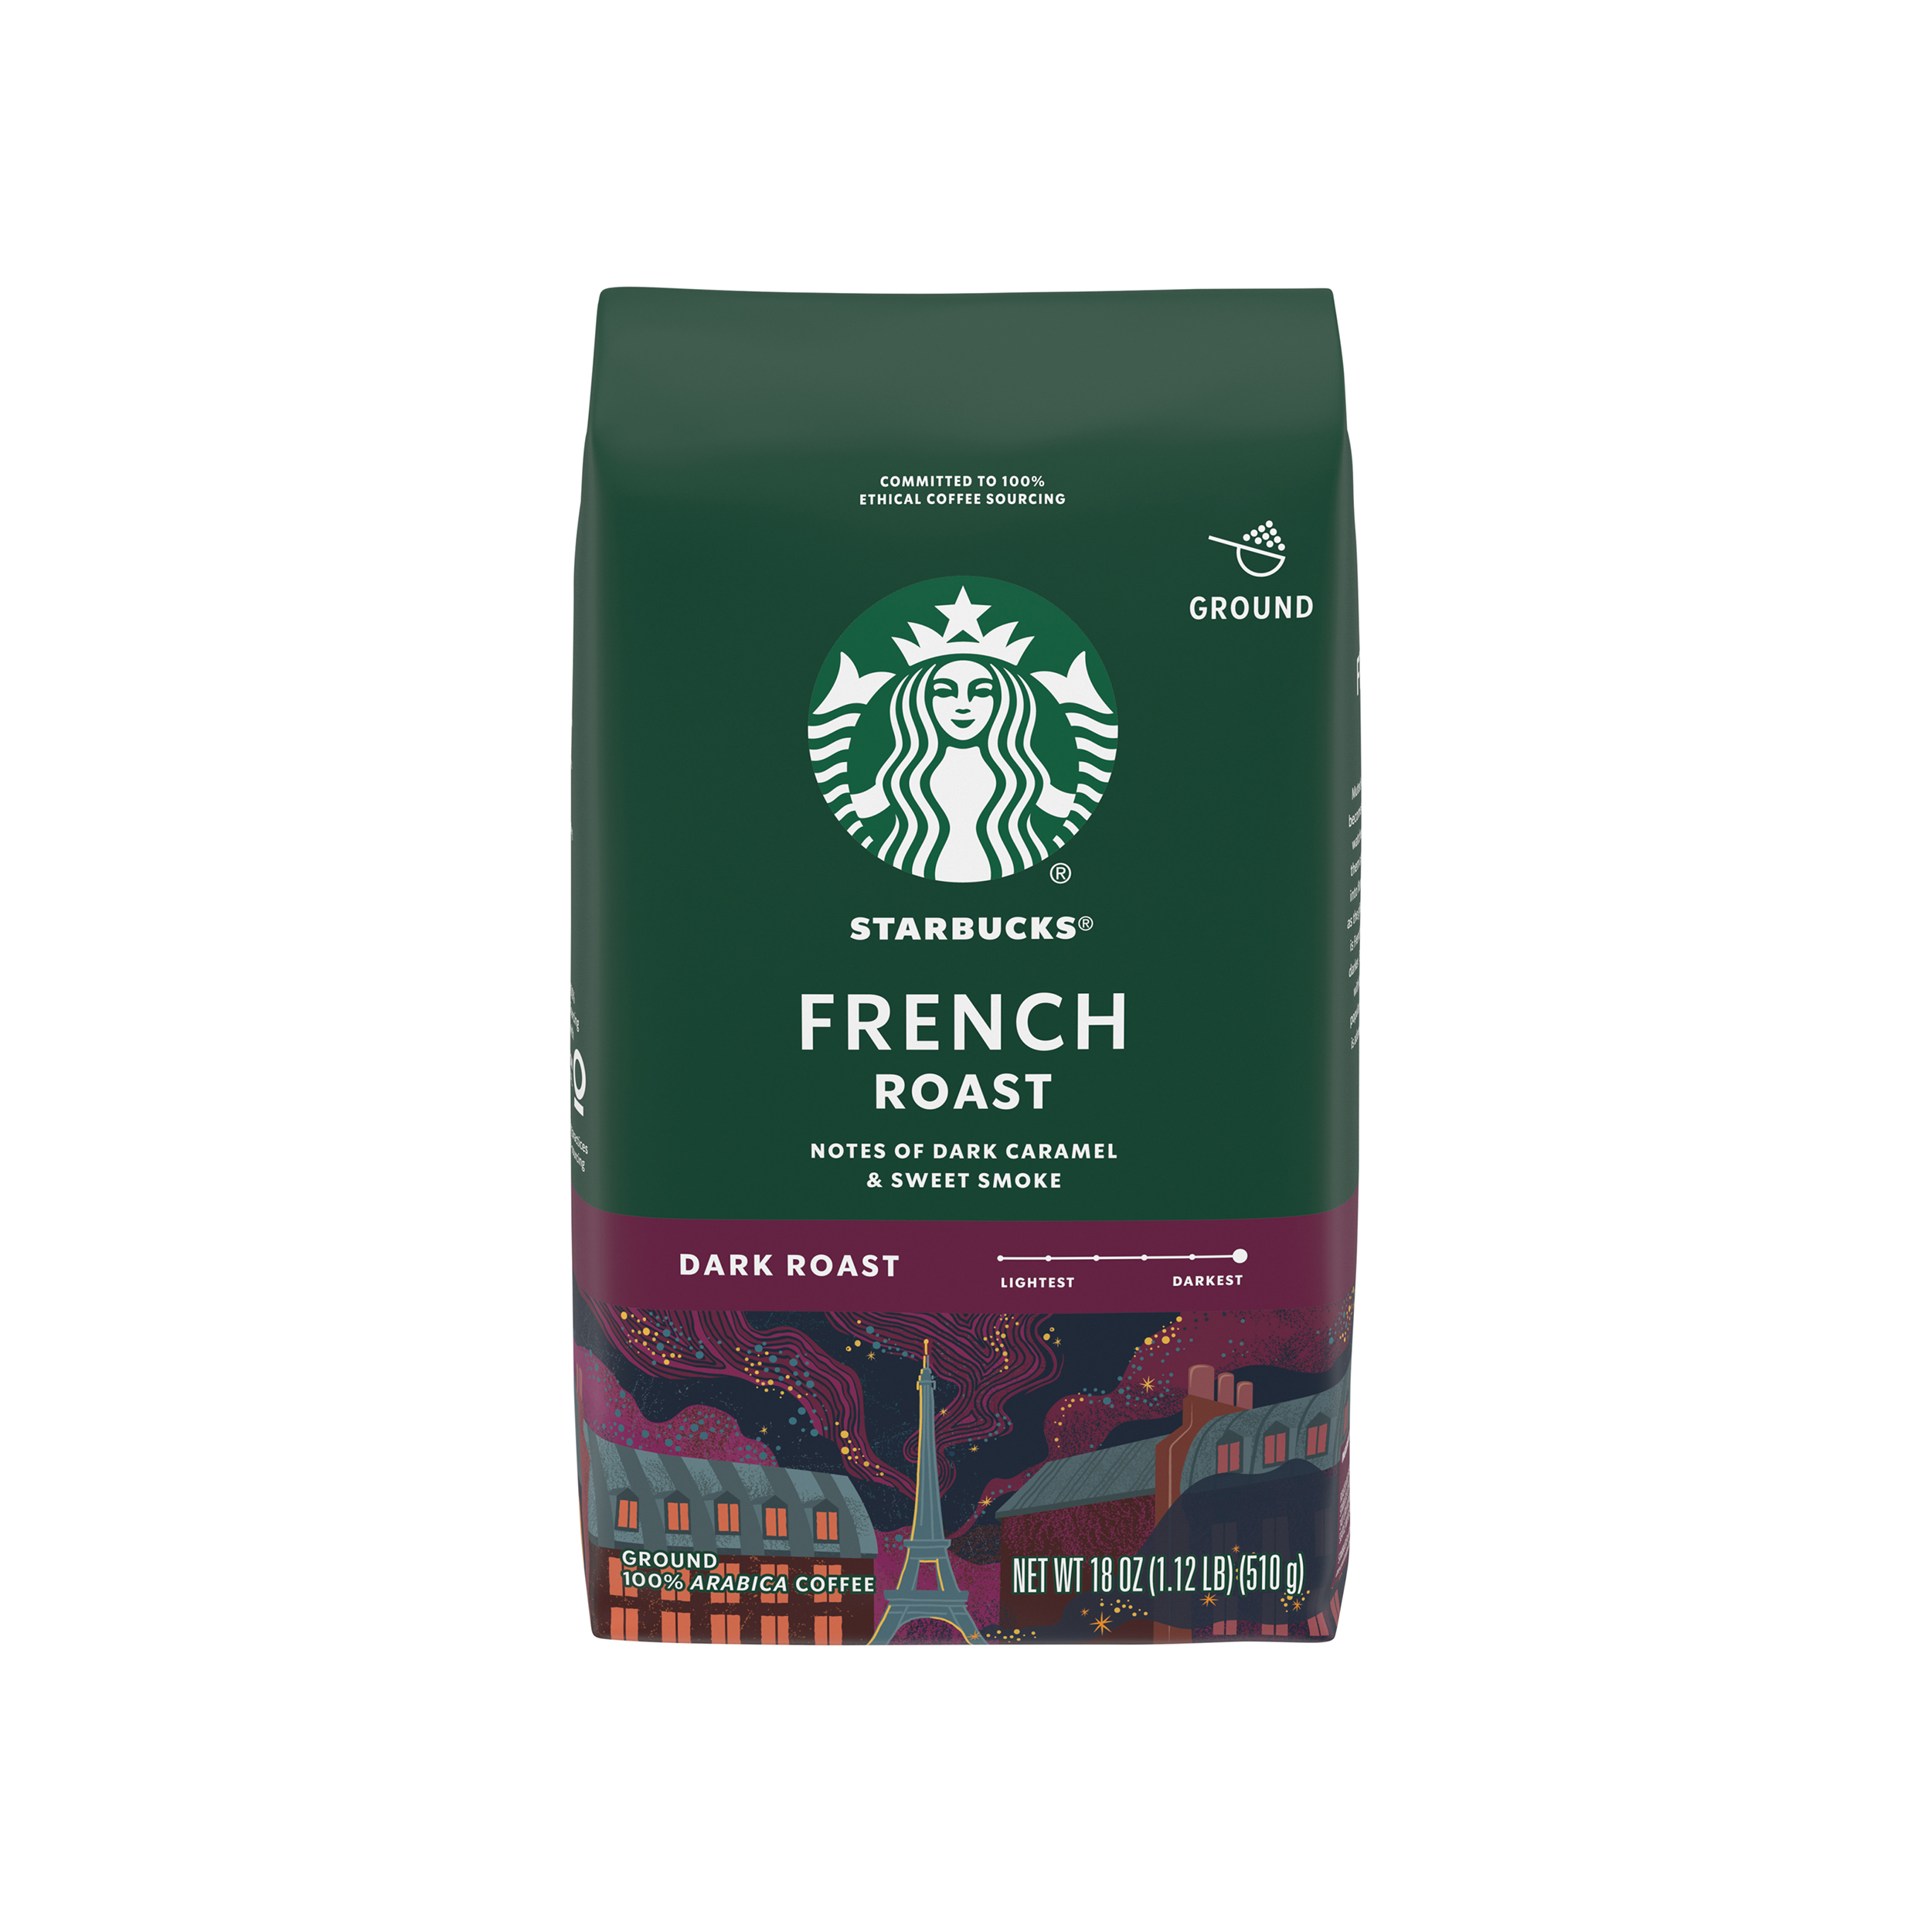 Starbucks Arabica Beans French Roast, Dark Roast, Ground Coffee, 18 oz - image 1 of 8